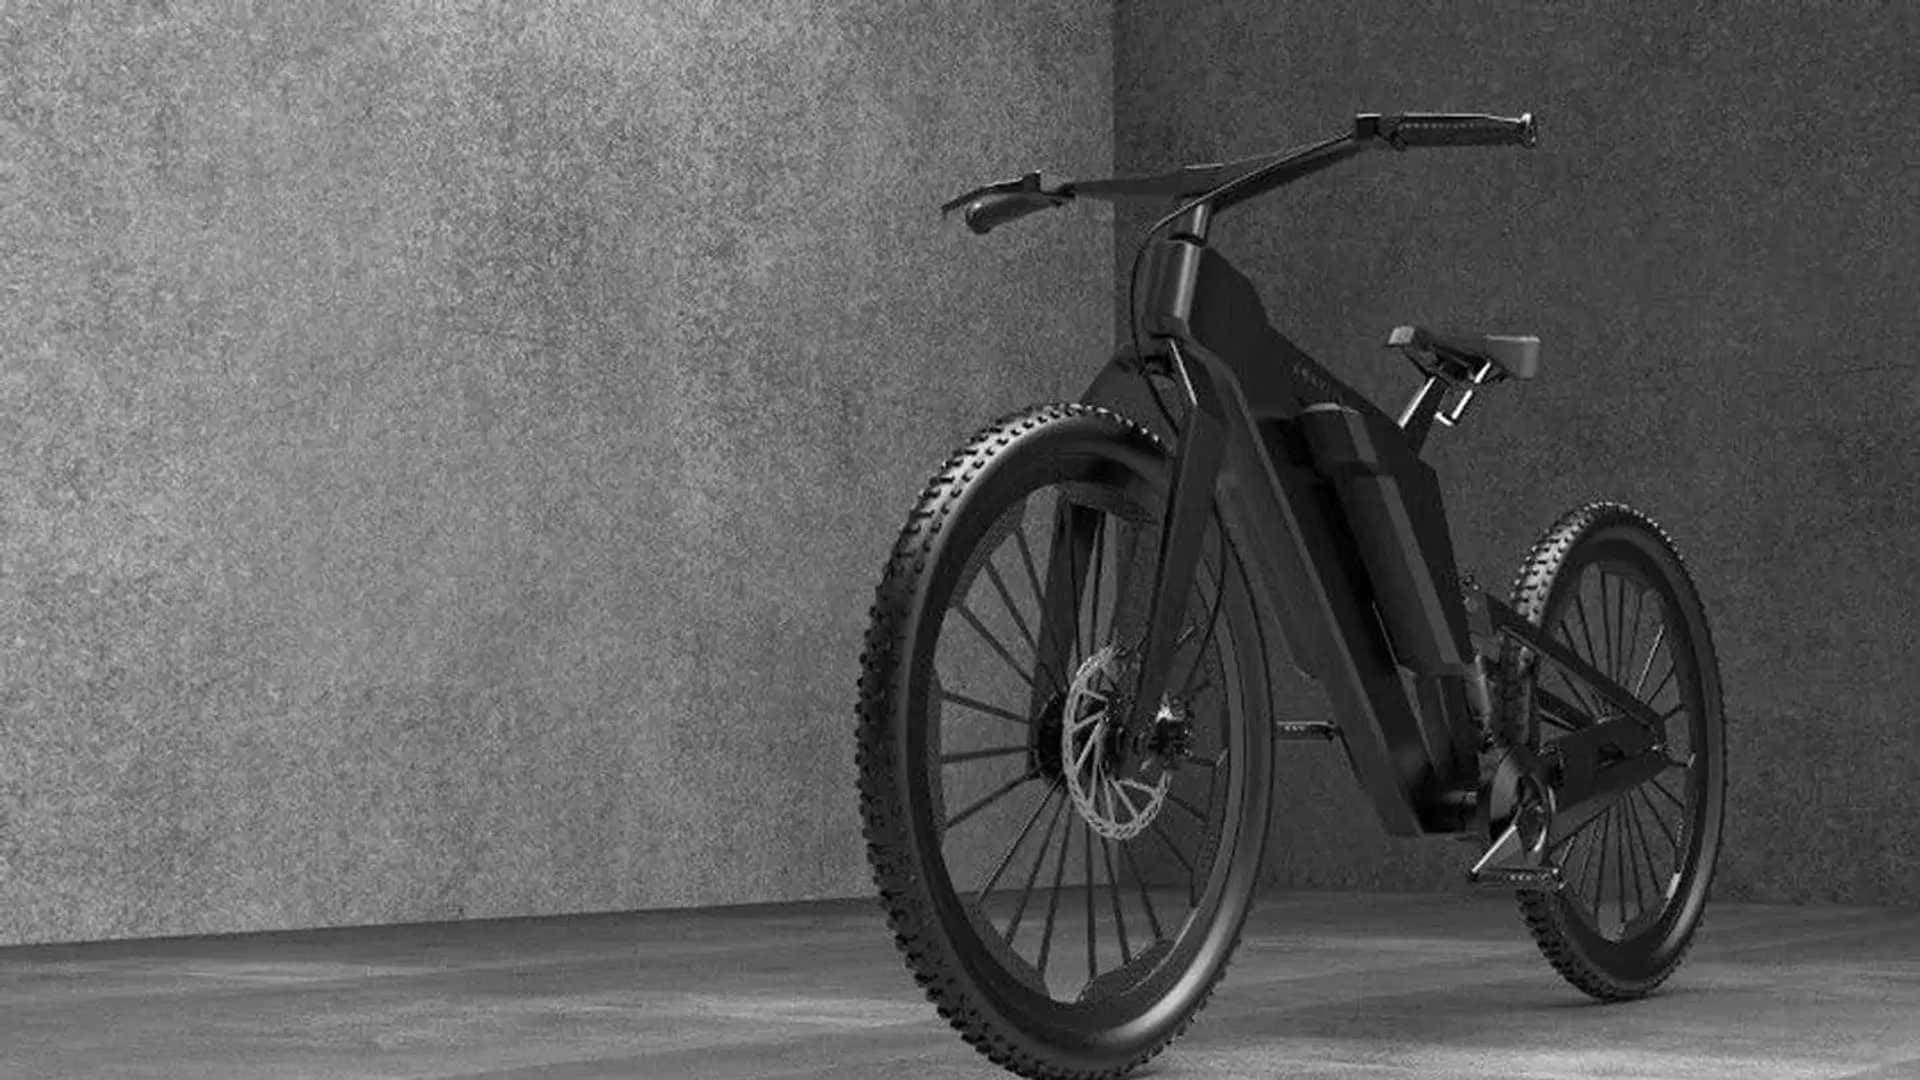 Bicicletaeléctrica Con Estilo En Un Entorno Urbano Fondo de pantalla